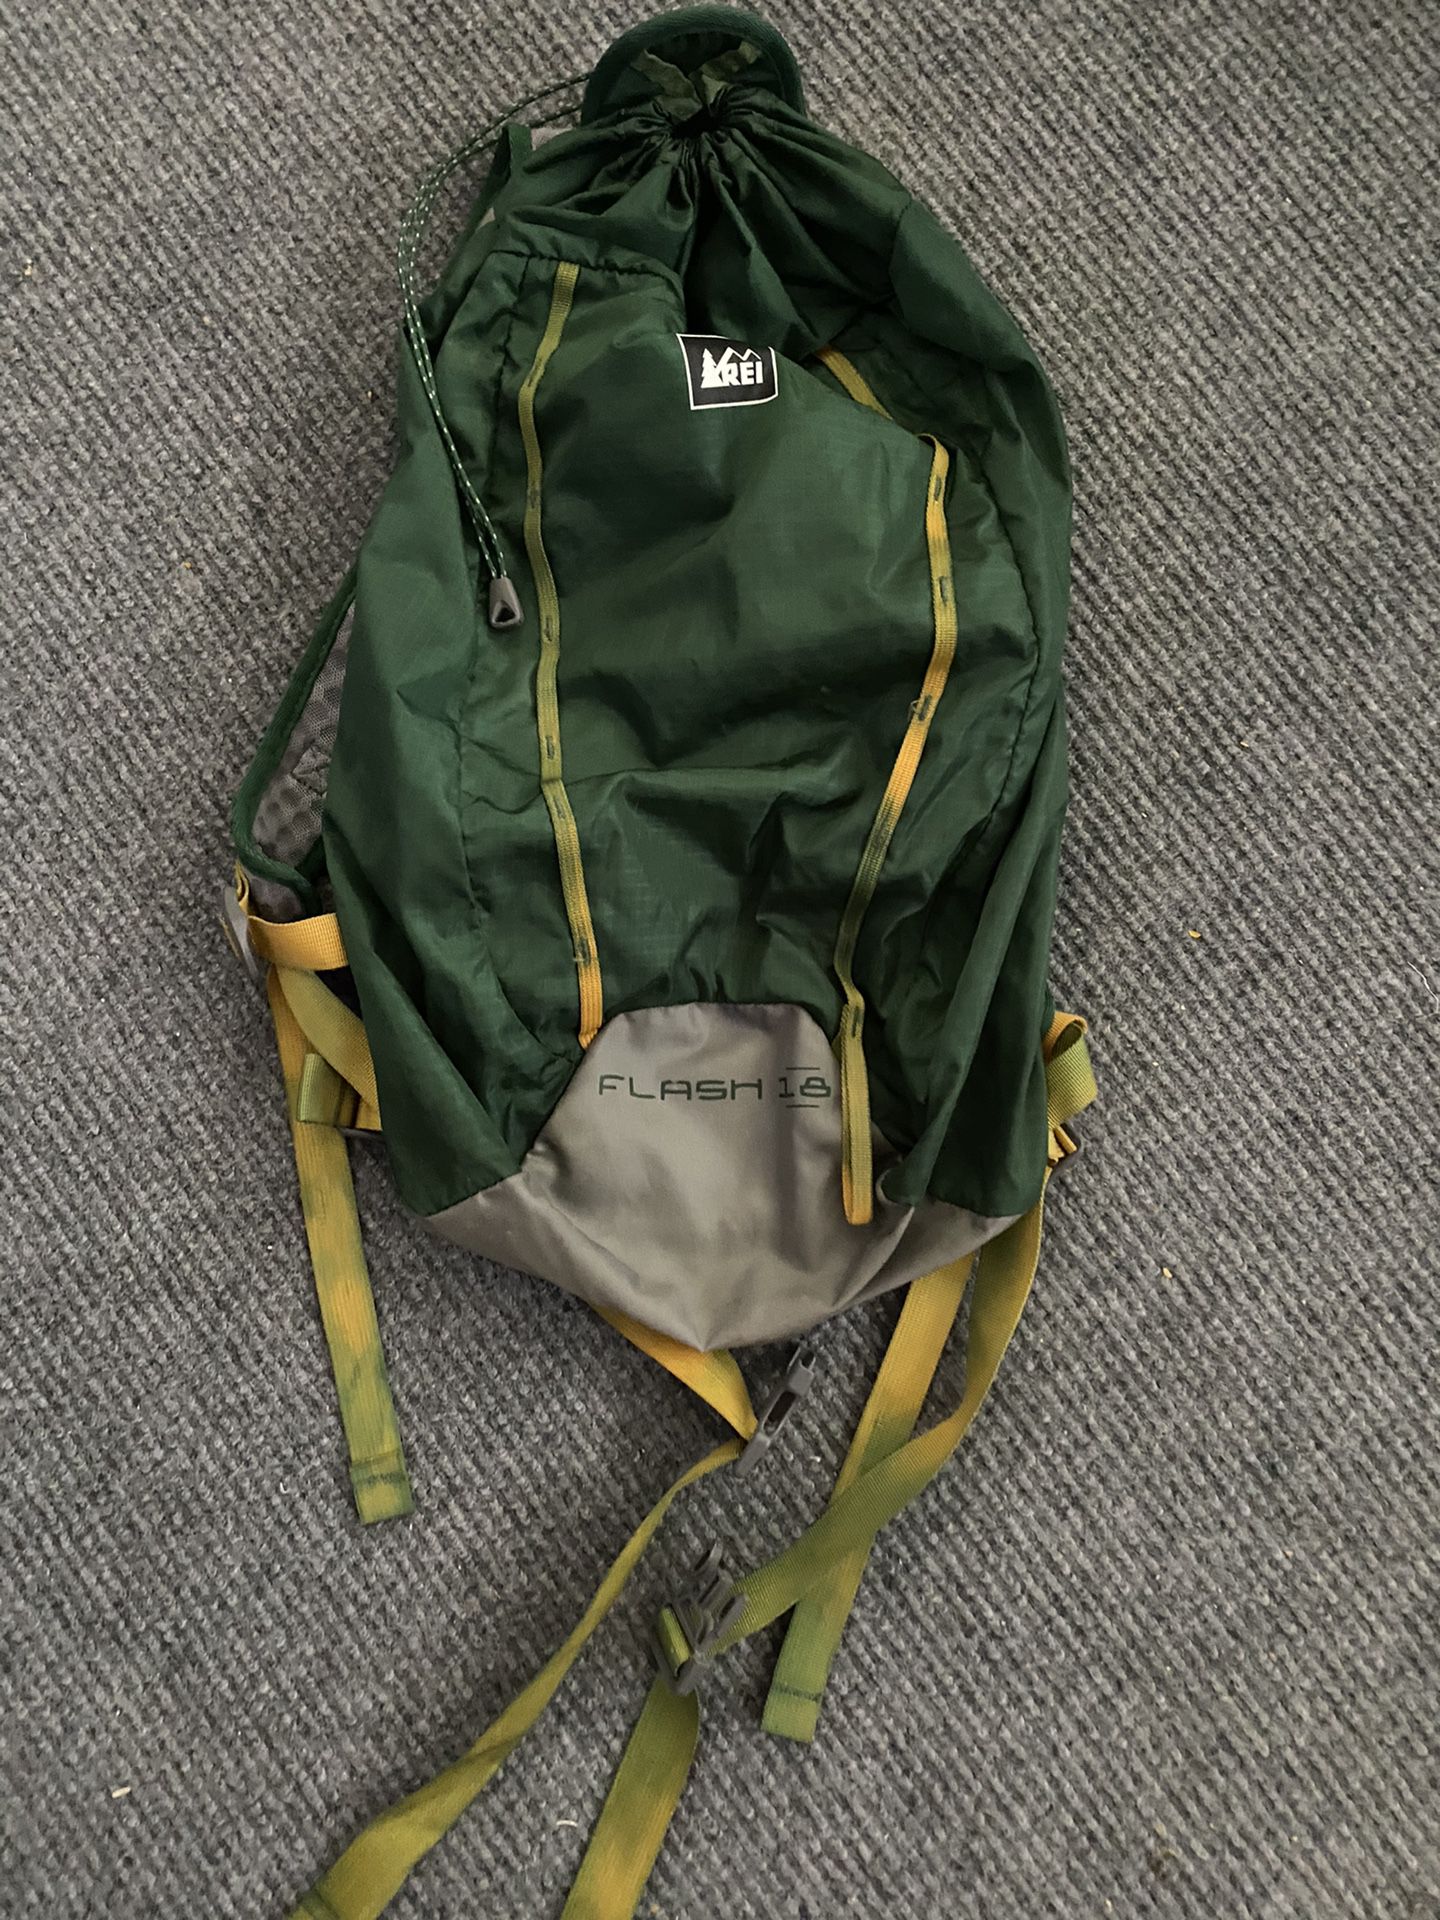 REI Flash 18 lightweight hiking backpack